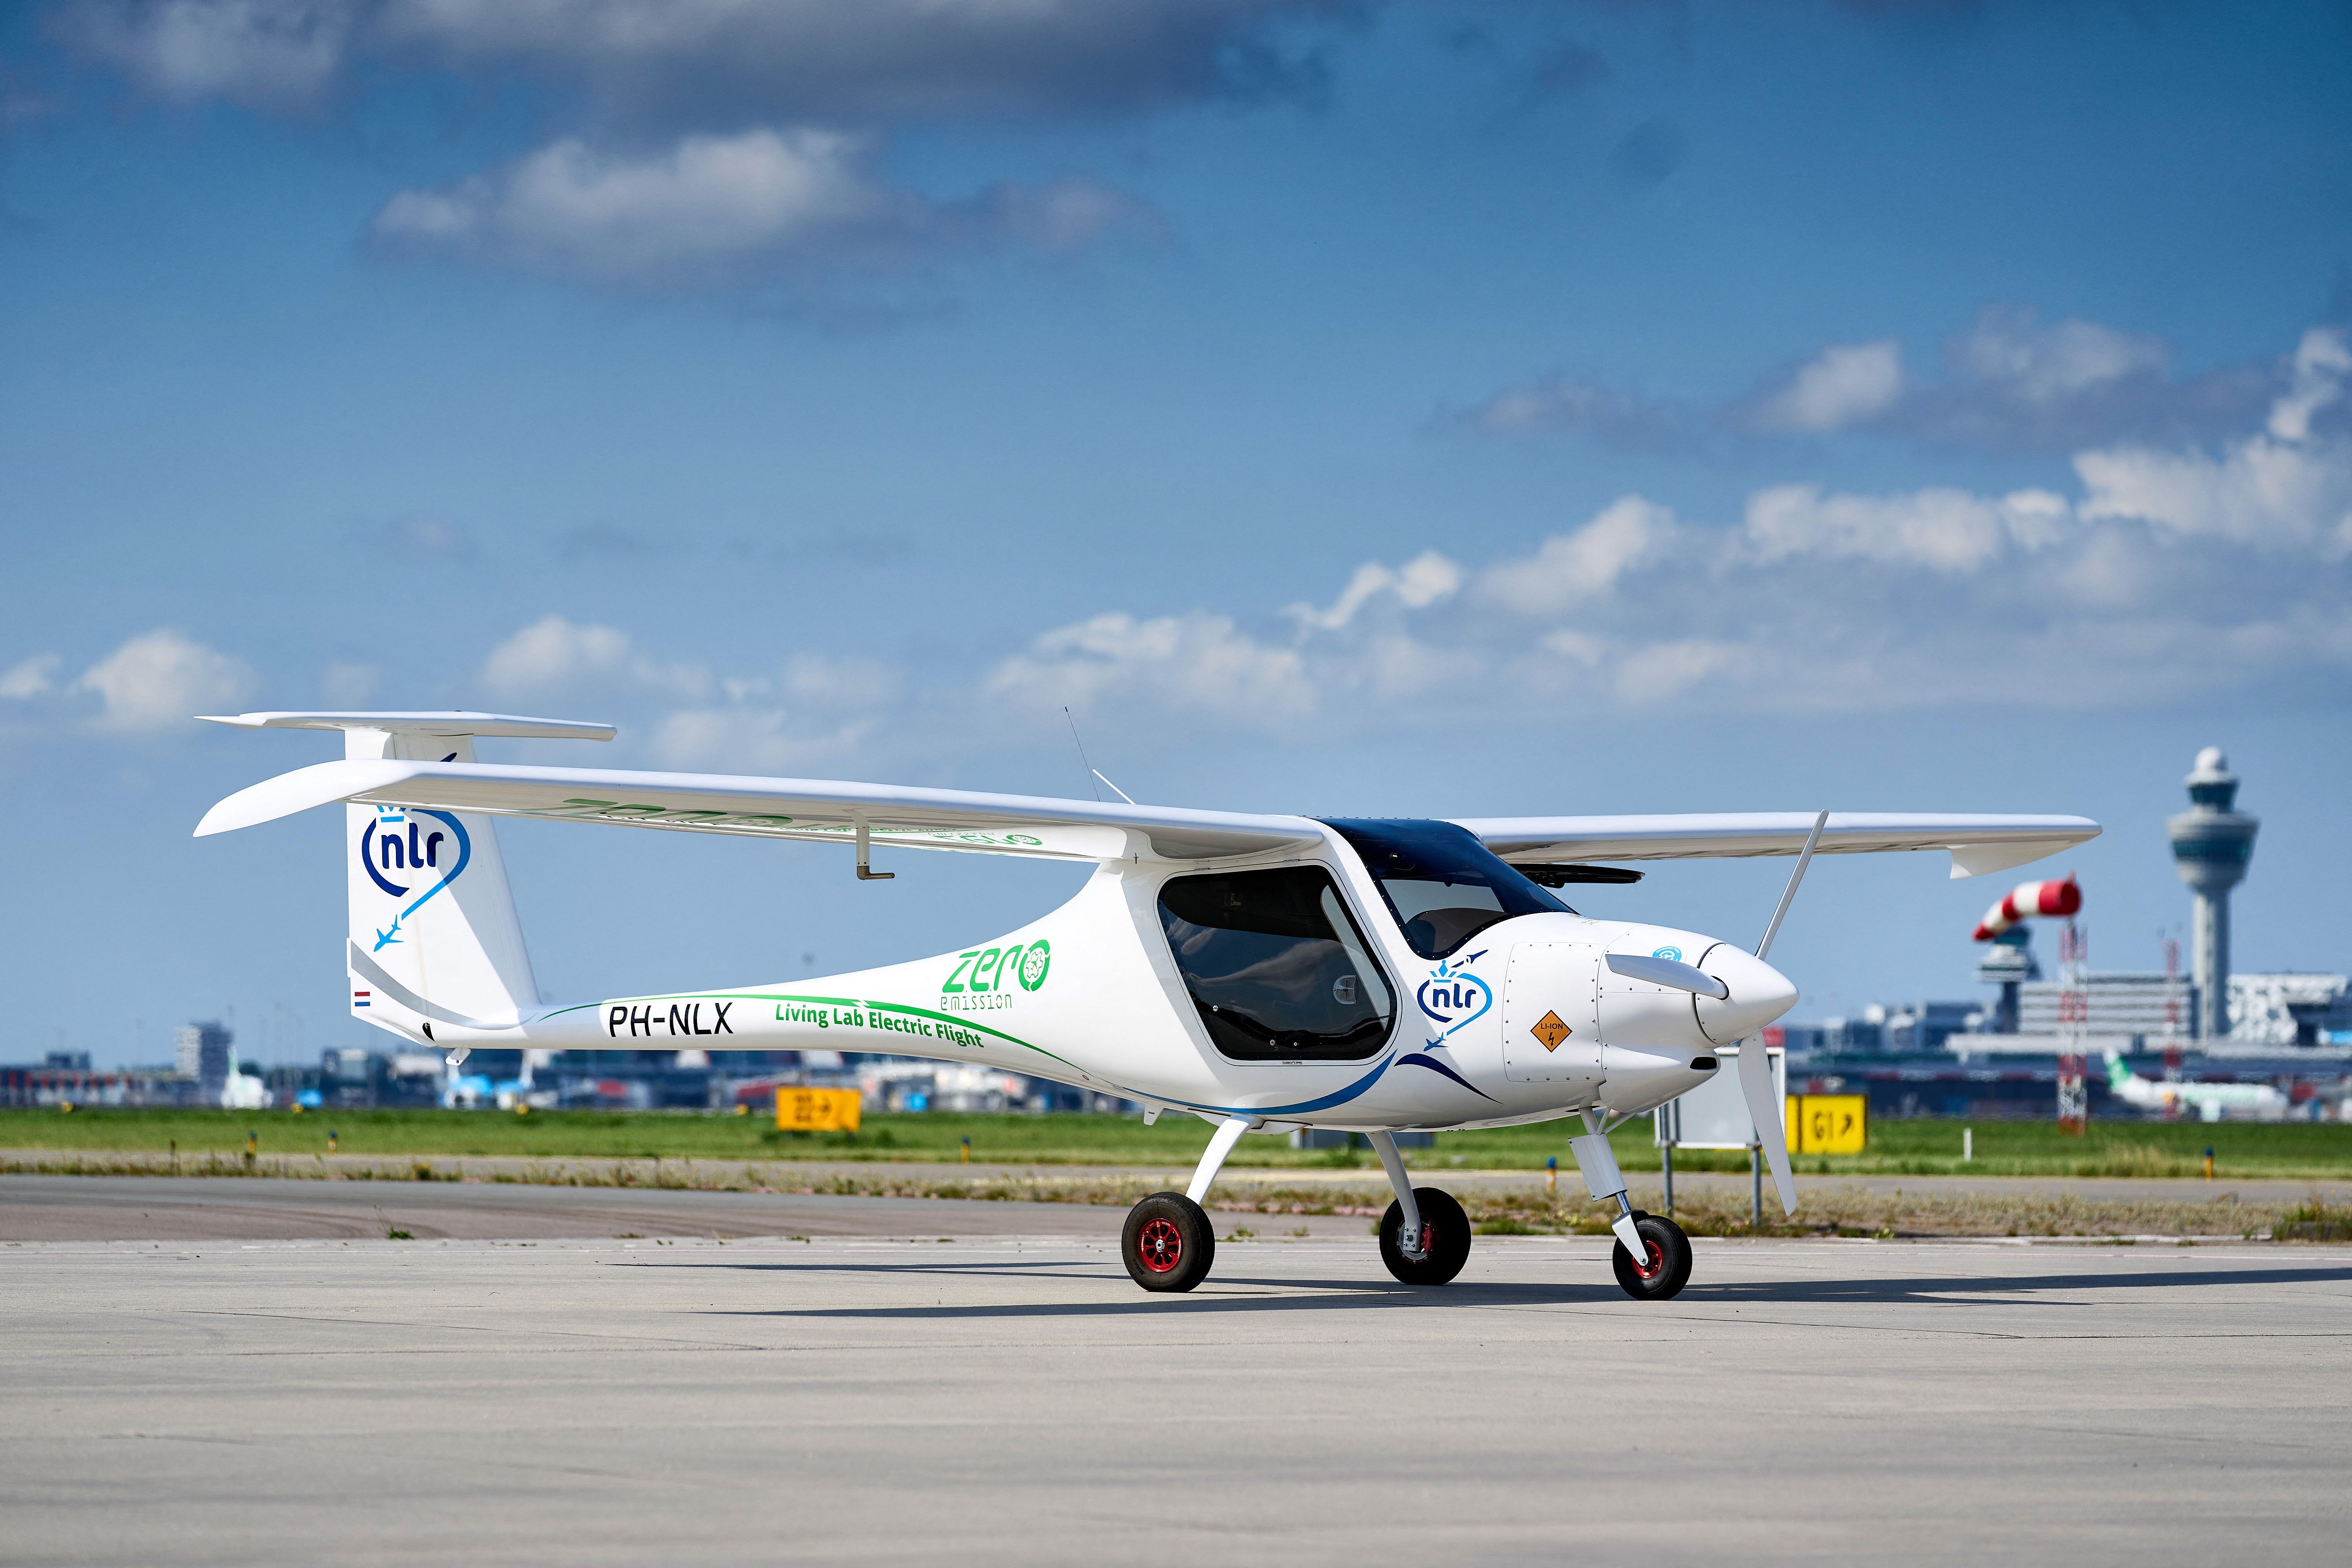 Pipistrel electric aircraft at Schiphol Airport